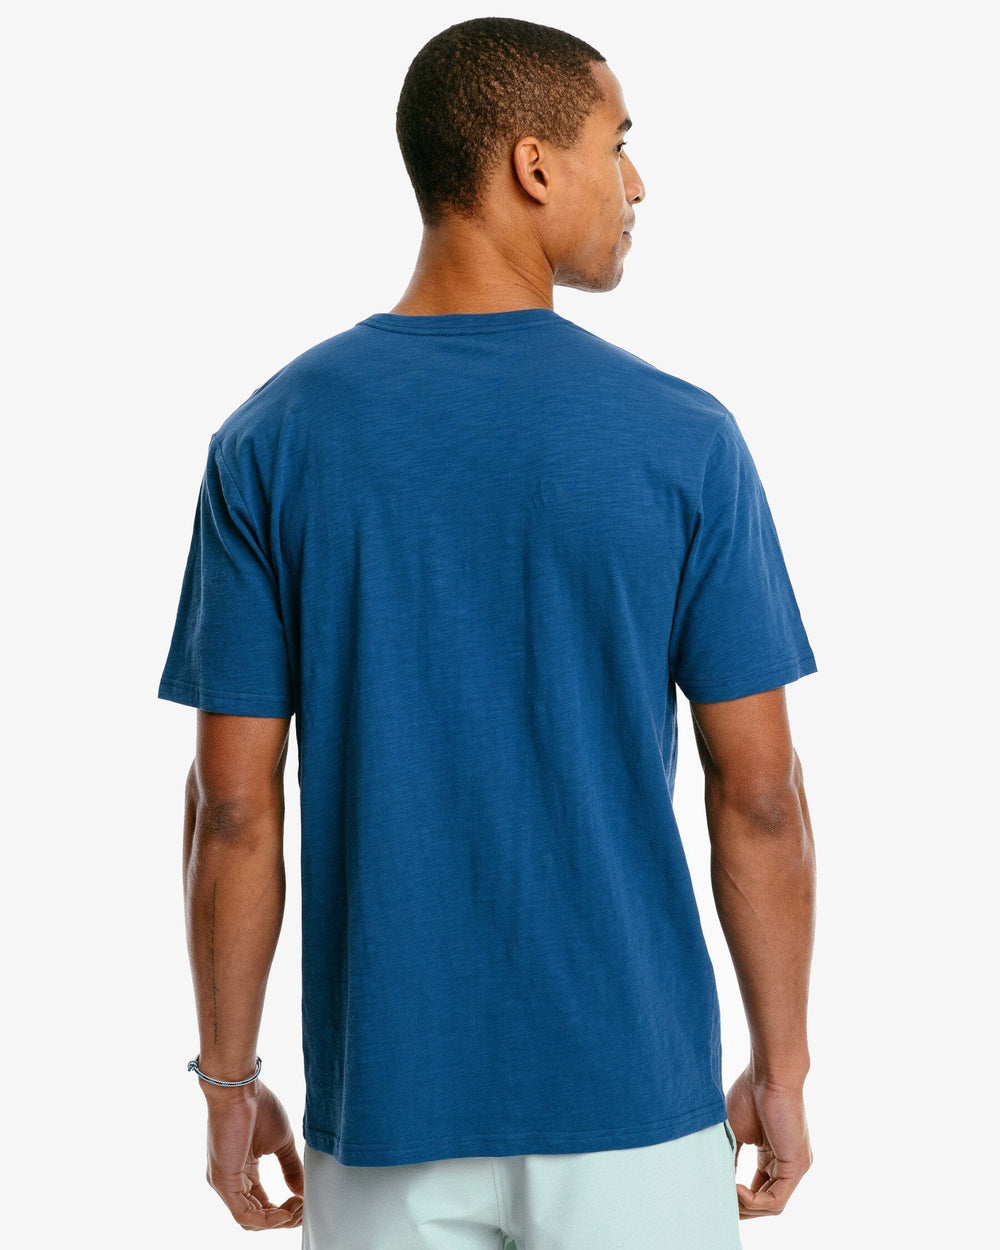 The back of the Men's Sun Farer Short Sleeve T-Shirt by Southern Tide - Dark Denim